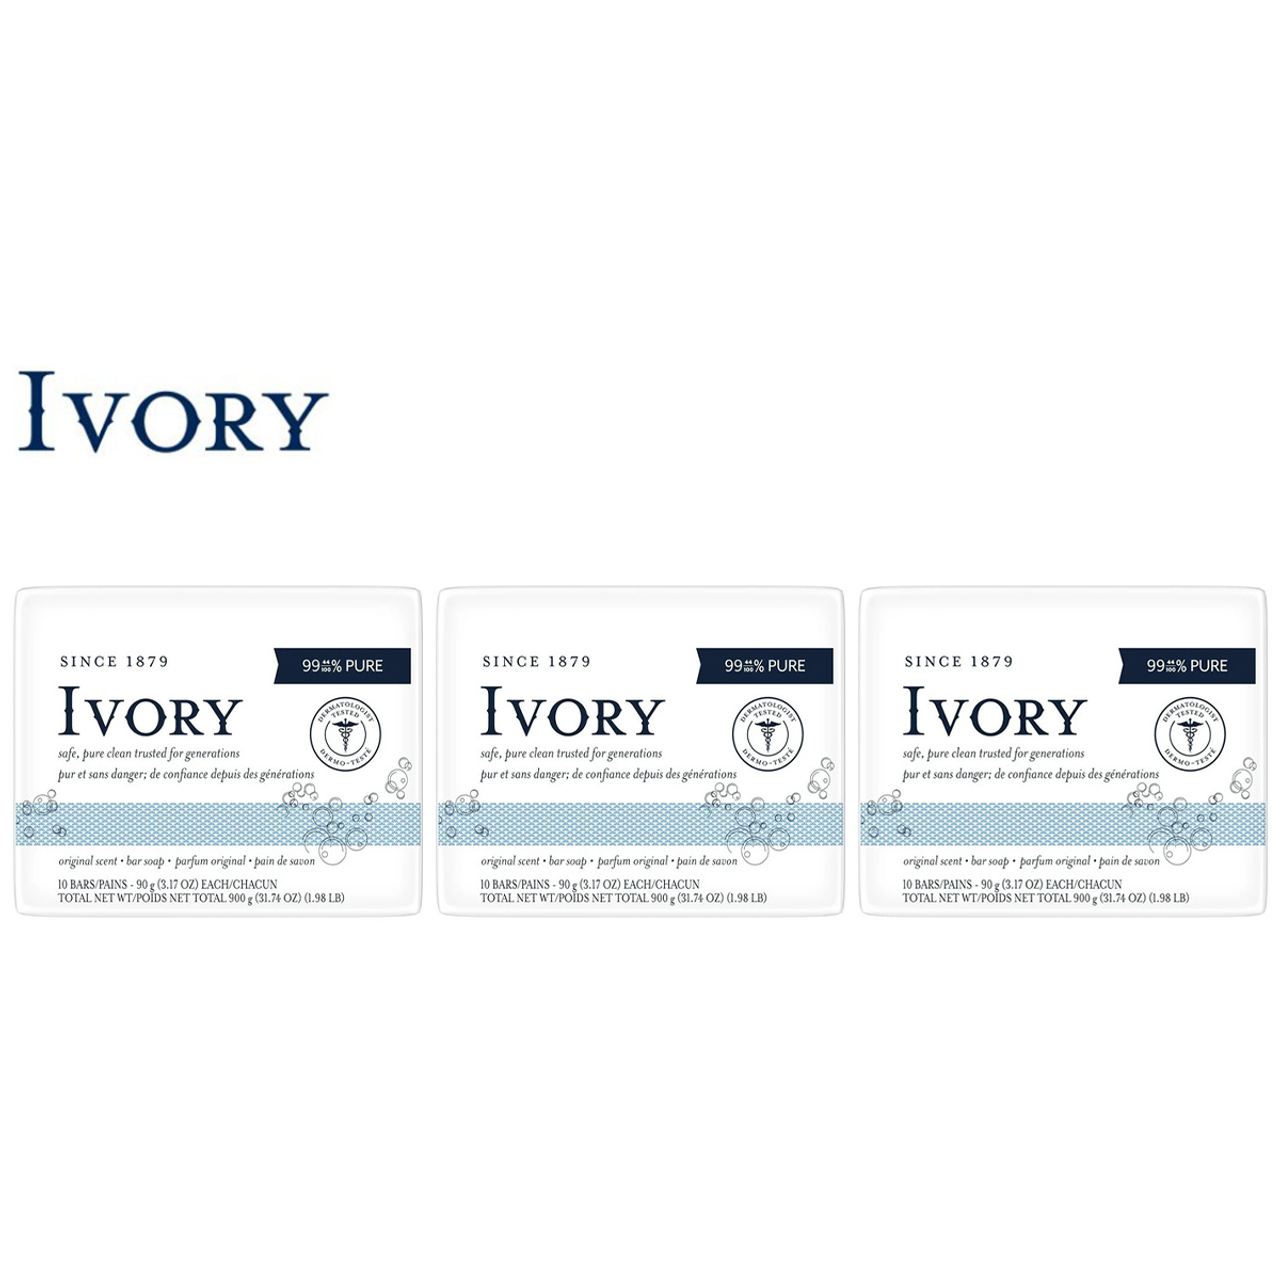 Ivory® Soap Bar, Original, 3.17 oz., 10 ct. (3-Pack) product image